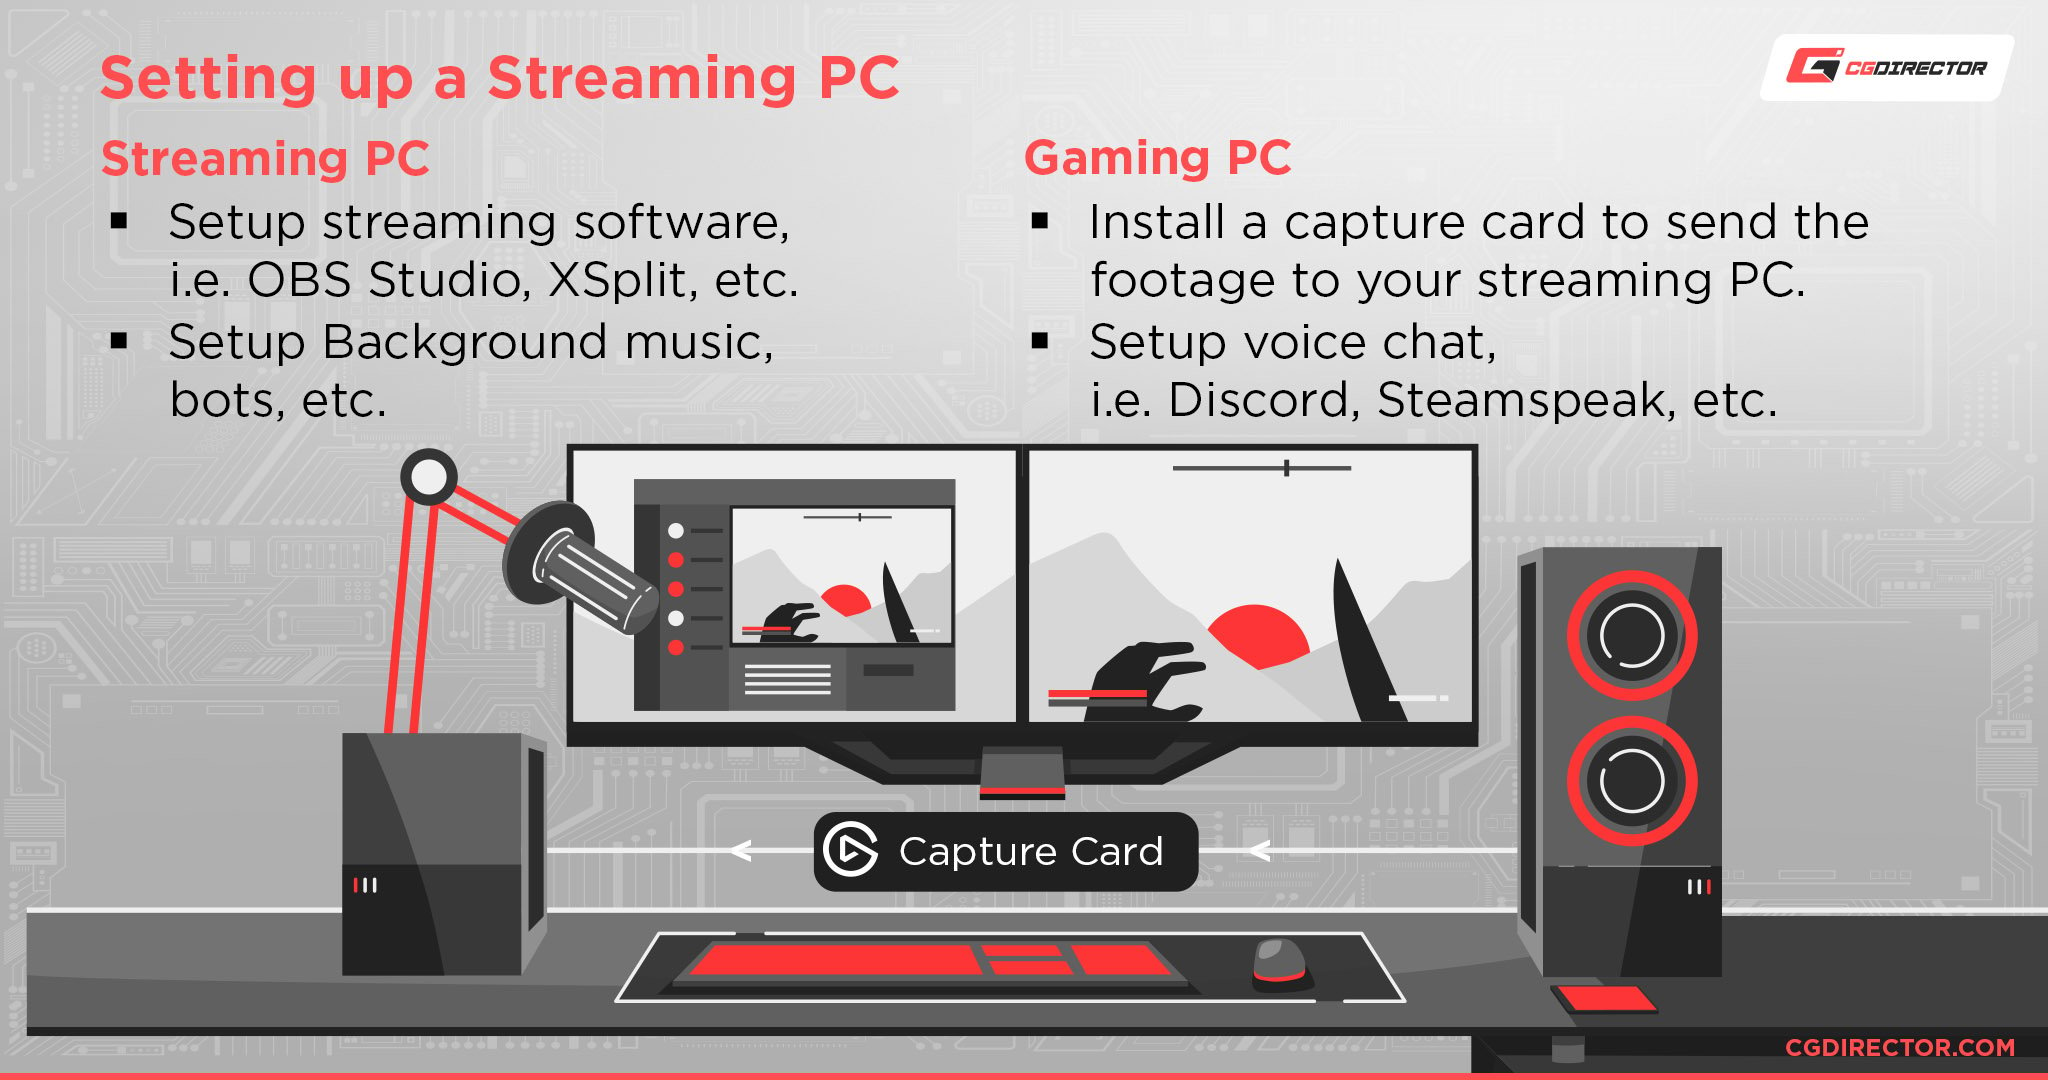 How to setup a streaming PC